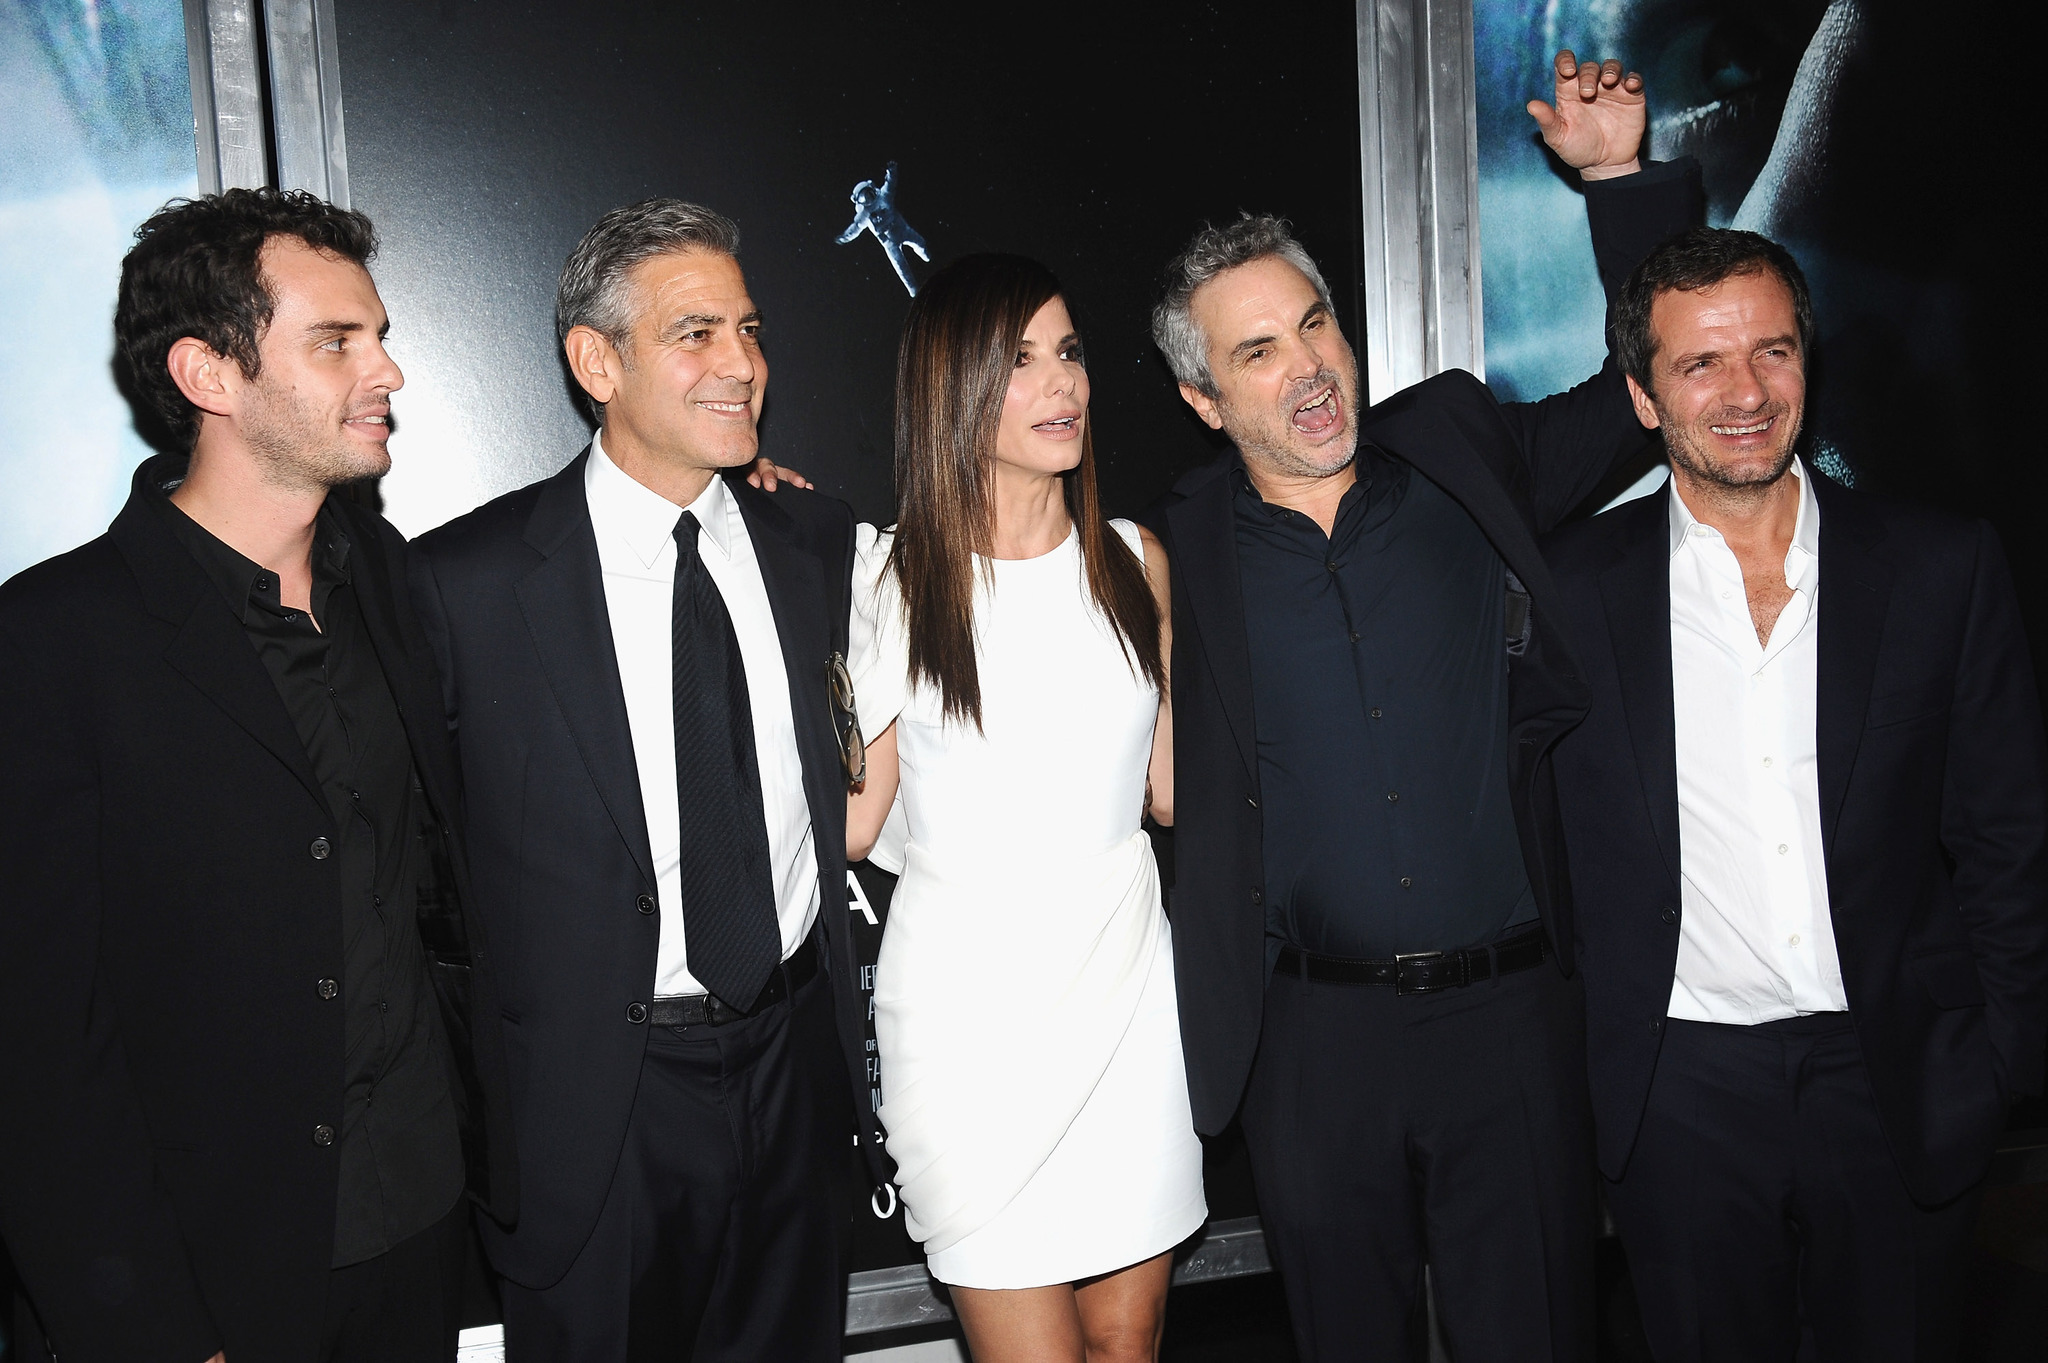 Sandra Bullock, George Clooney, Alfonso Cuarón, Jonás Cuarón, David Heyman and Gary Gershoff at event of Gravitacija (2013)